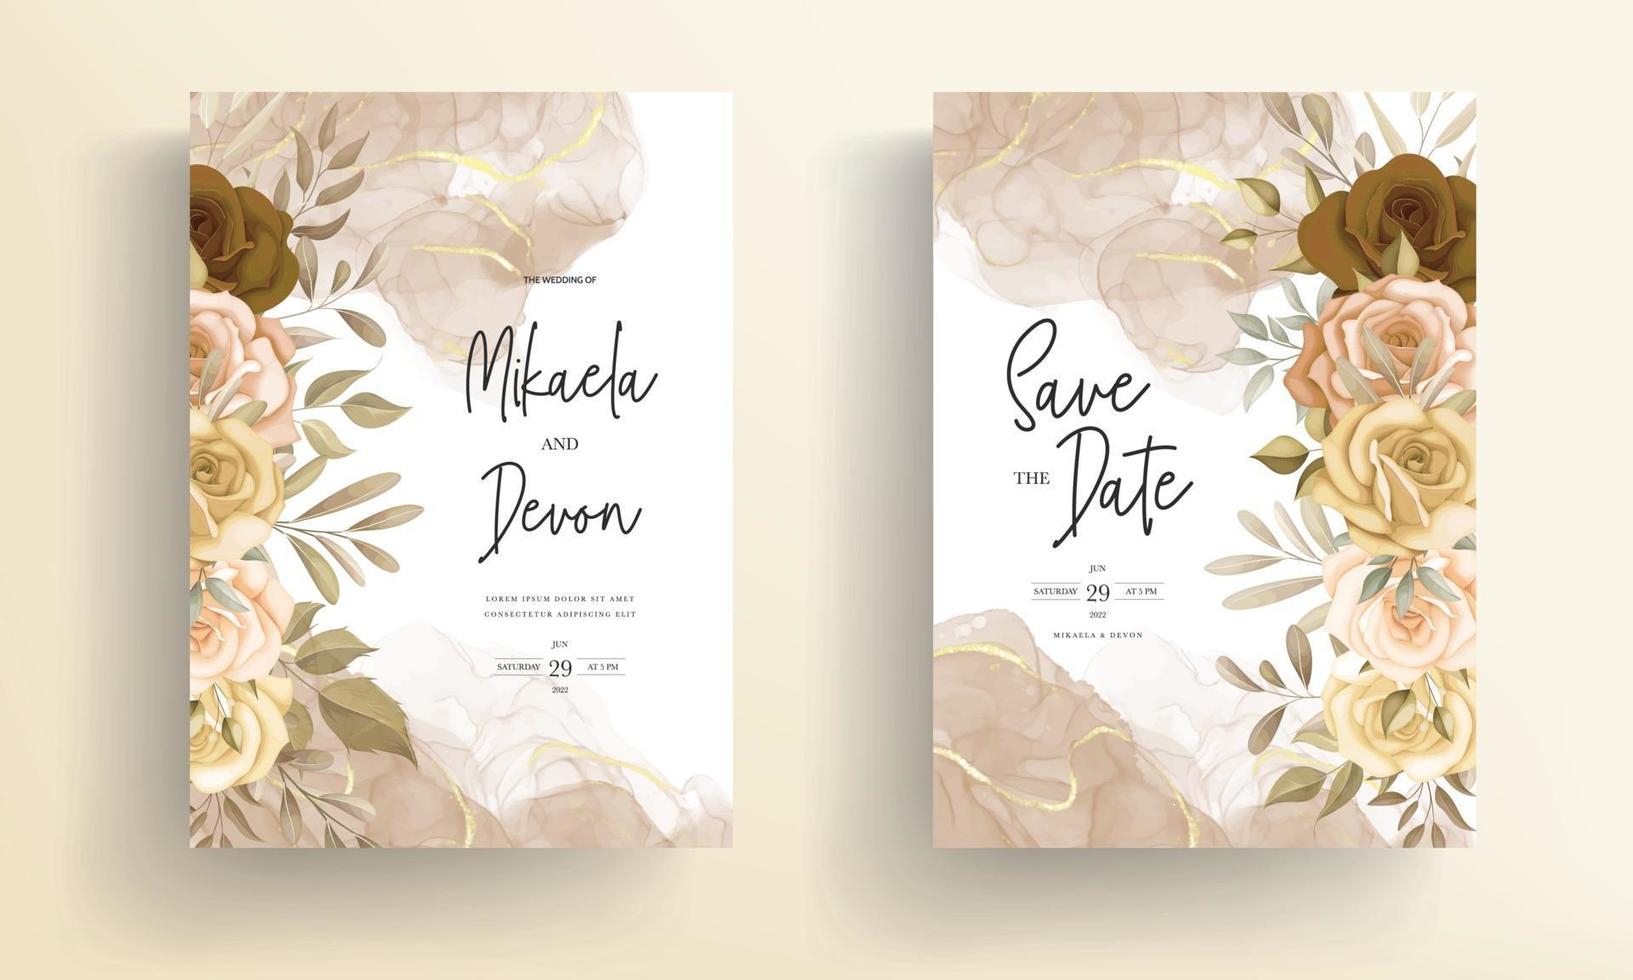 Beautiful autumn flower wedding invitation card vector